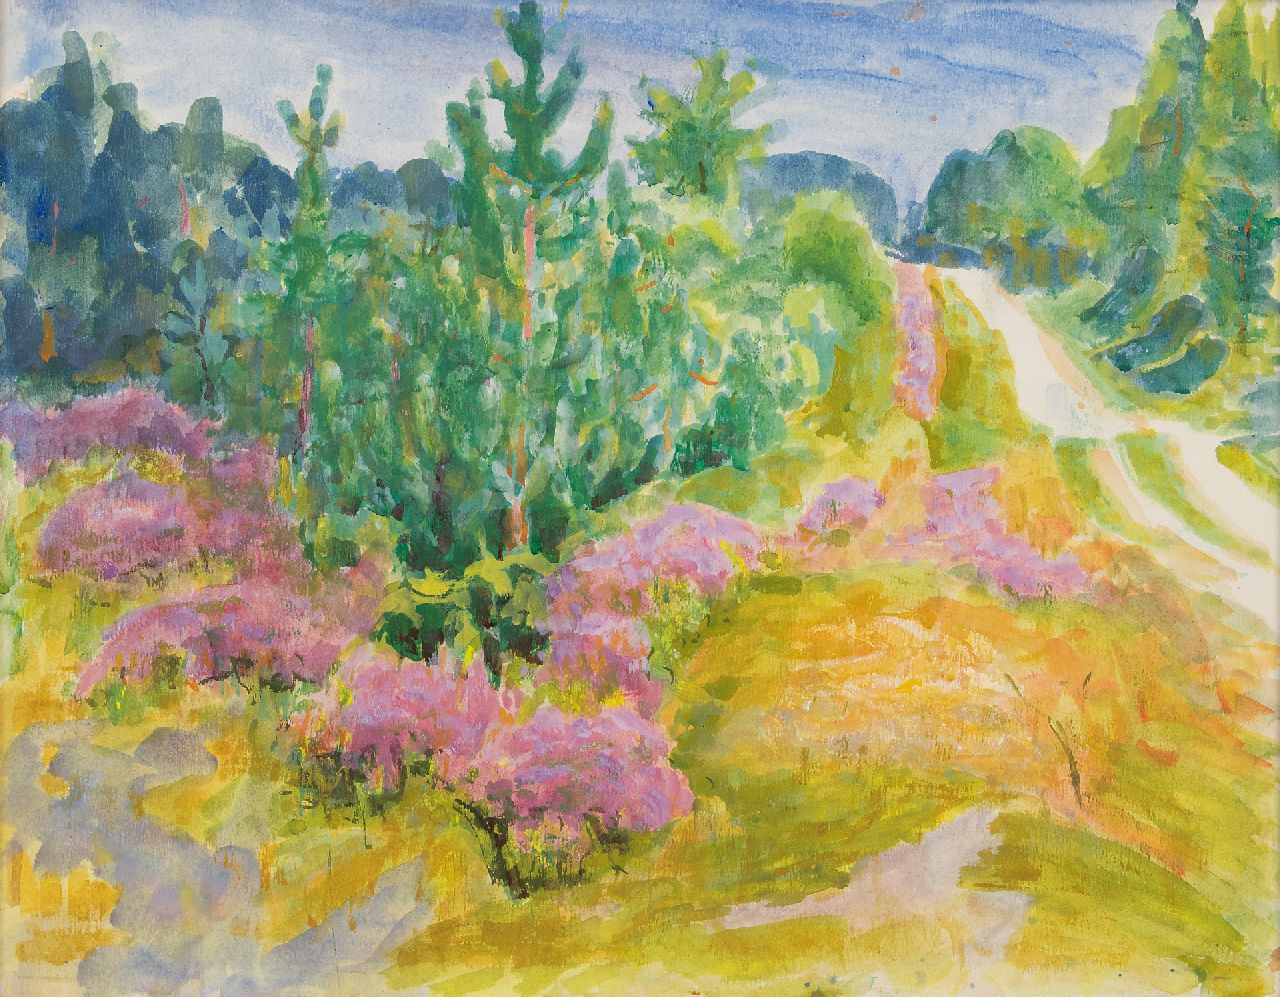 Altink J.  | Jan Altink, Landweg door dennenbos en bloeiende heide, aquarel op papier 54,9 x 69,8 cm